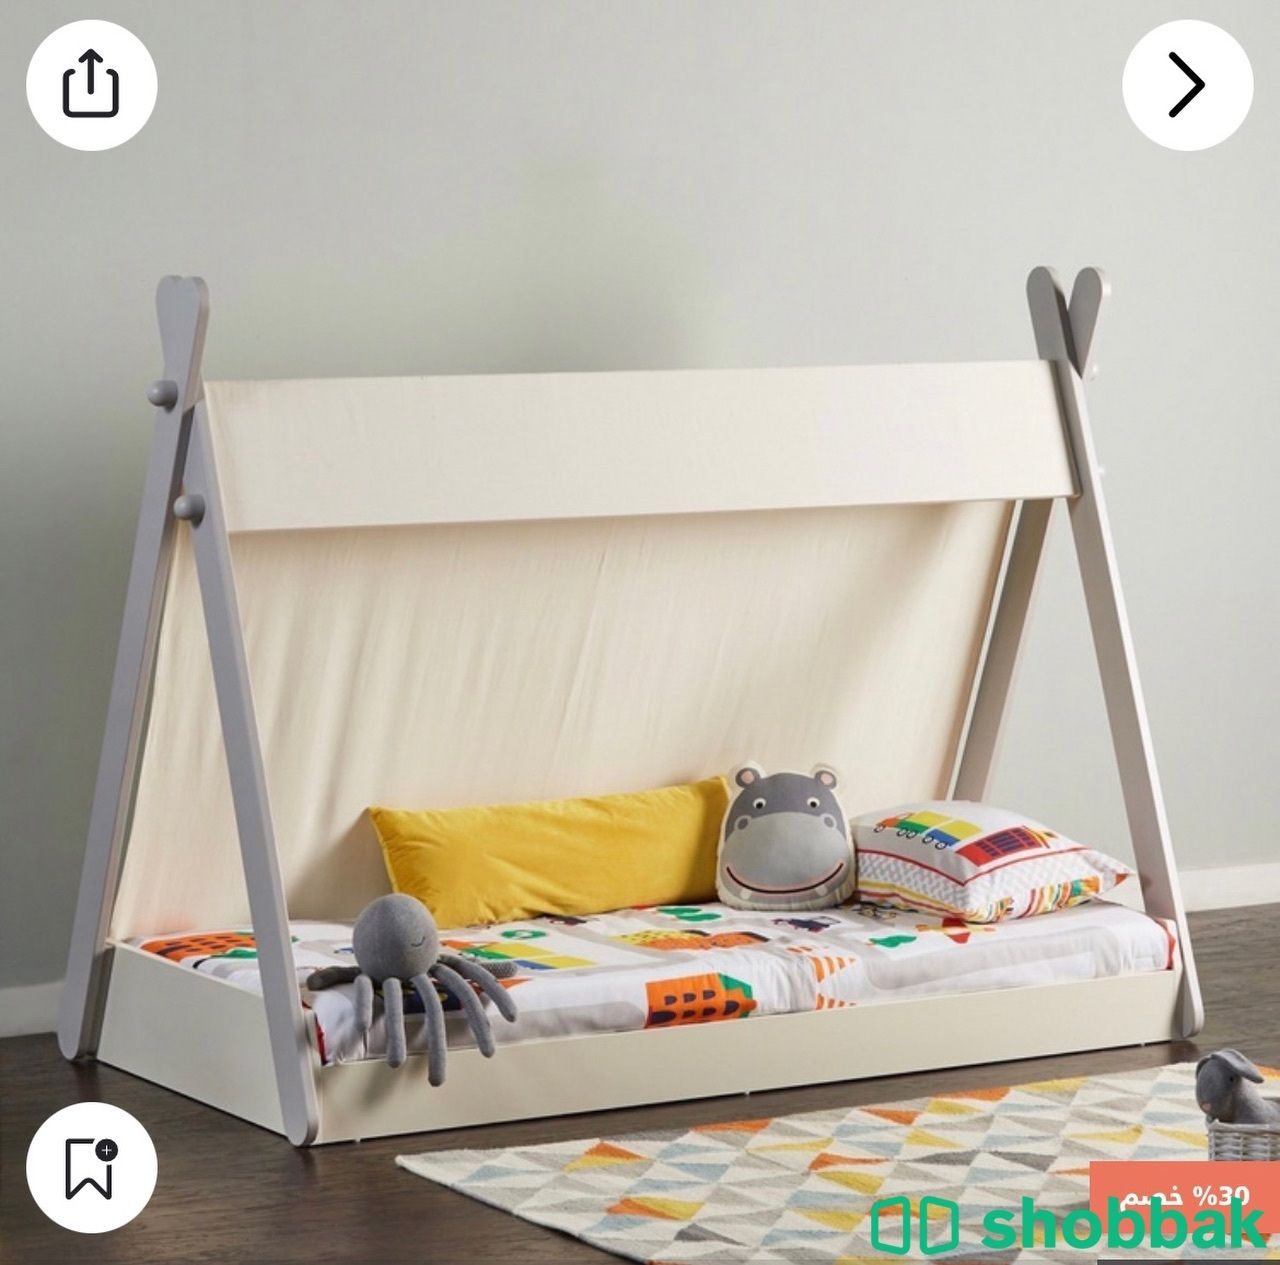 سرير اطفال - هوم سنتر Shobbak Saudi Arabia